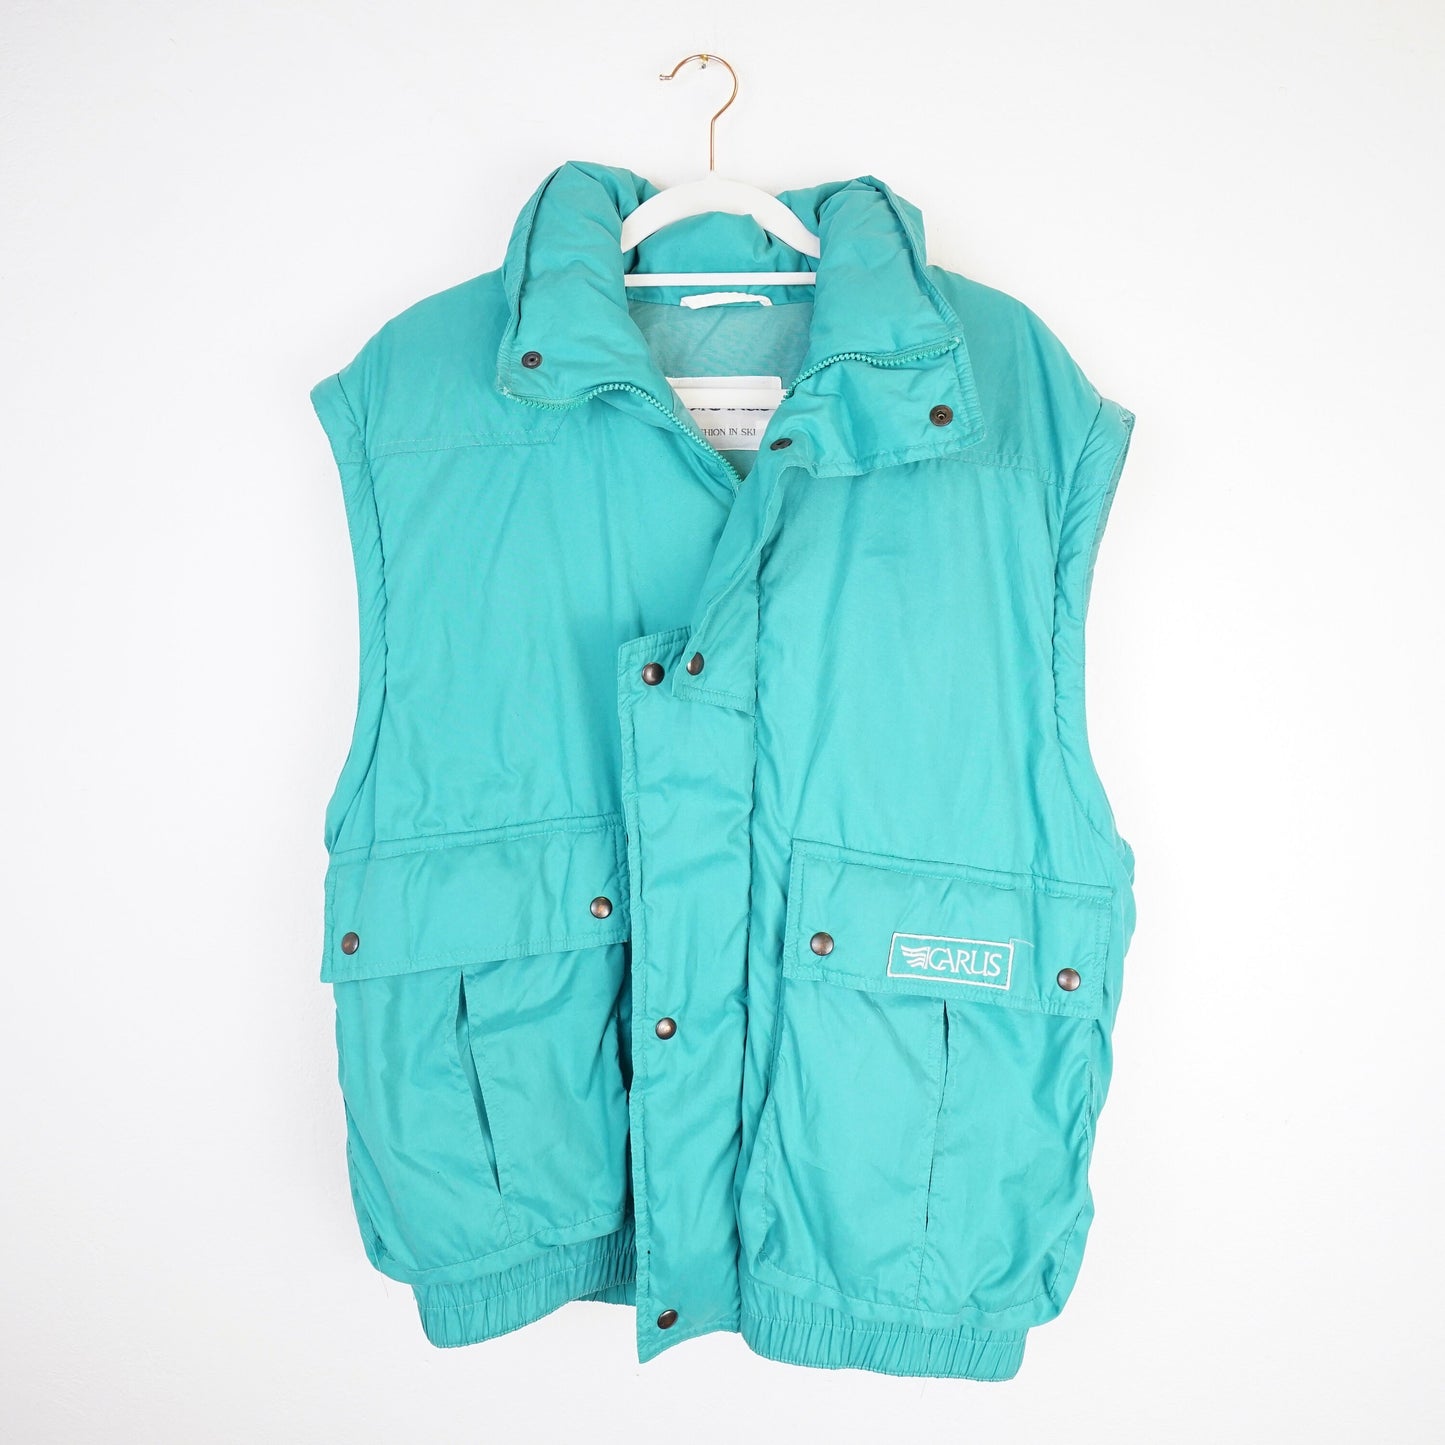 Vintage Ski Jacket Size L turquoise